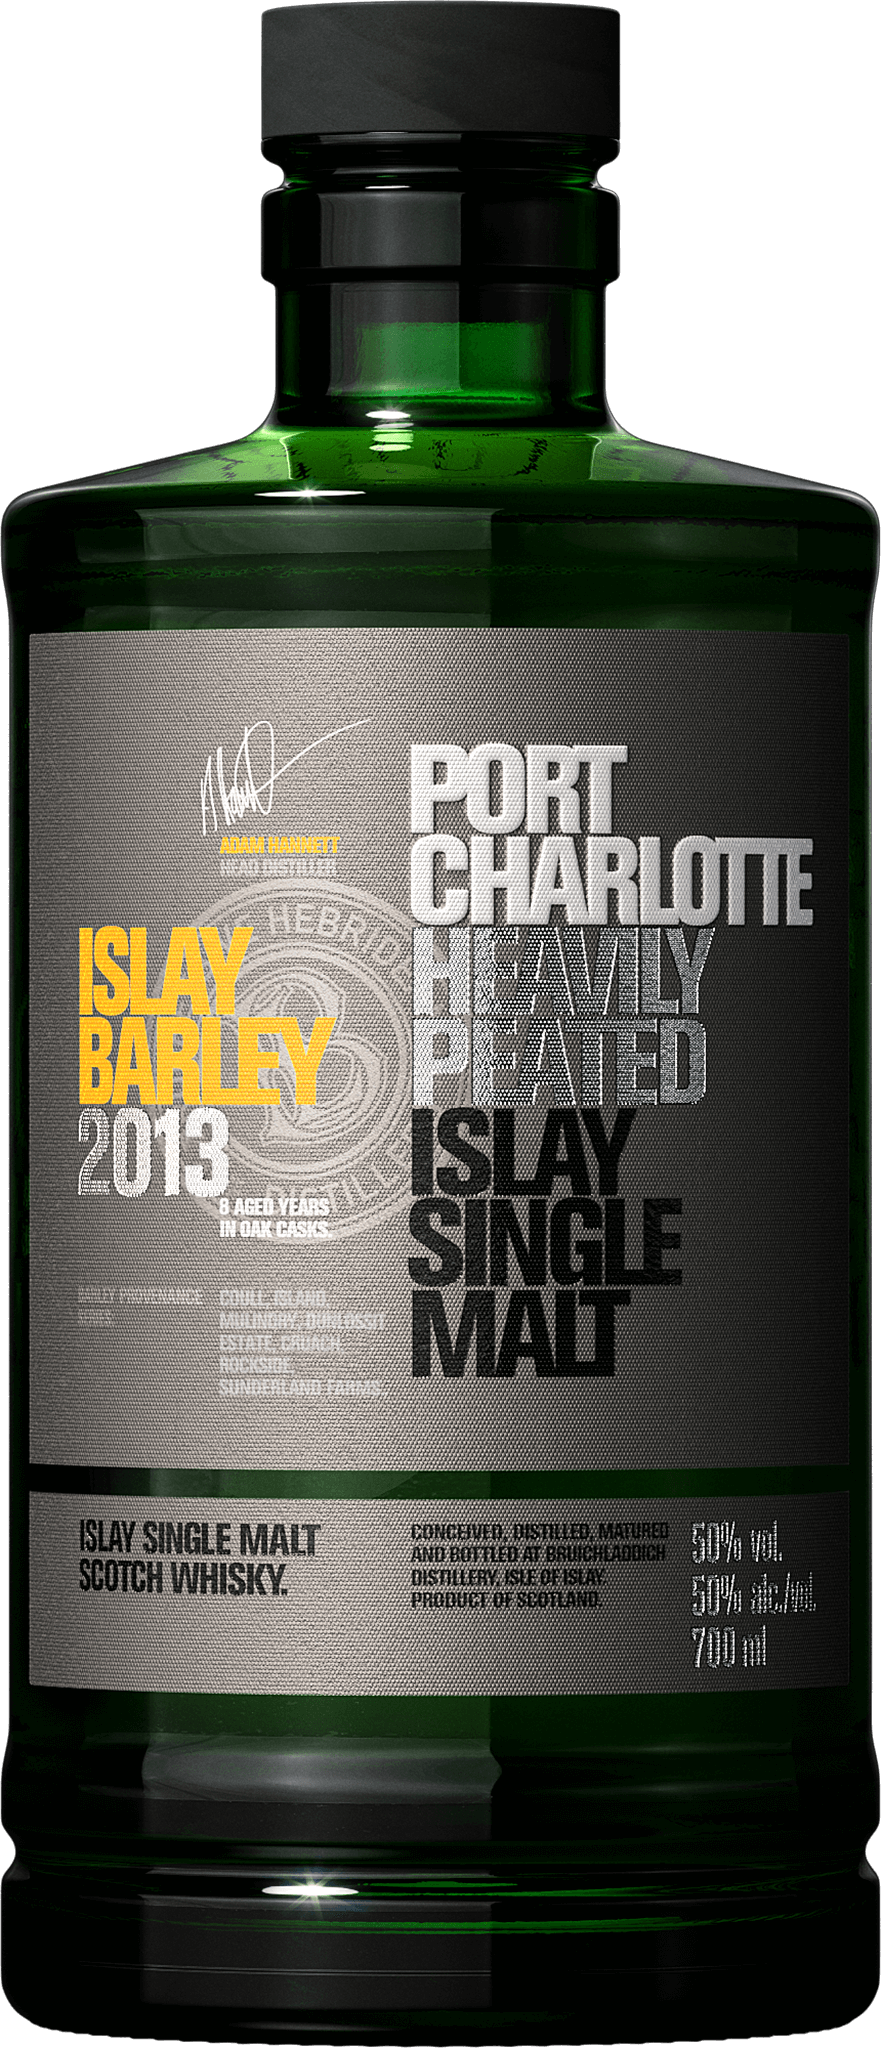 Port Charlotte Islay Barley 2013